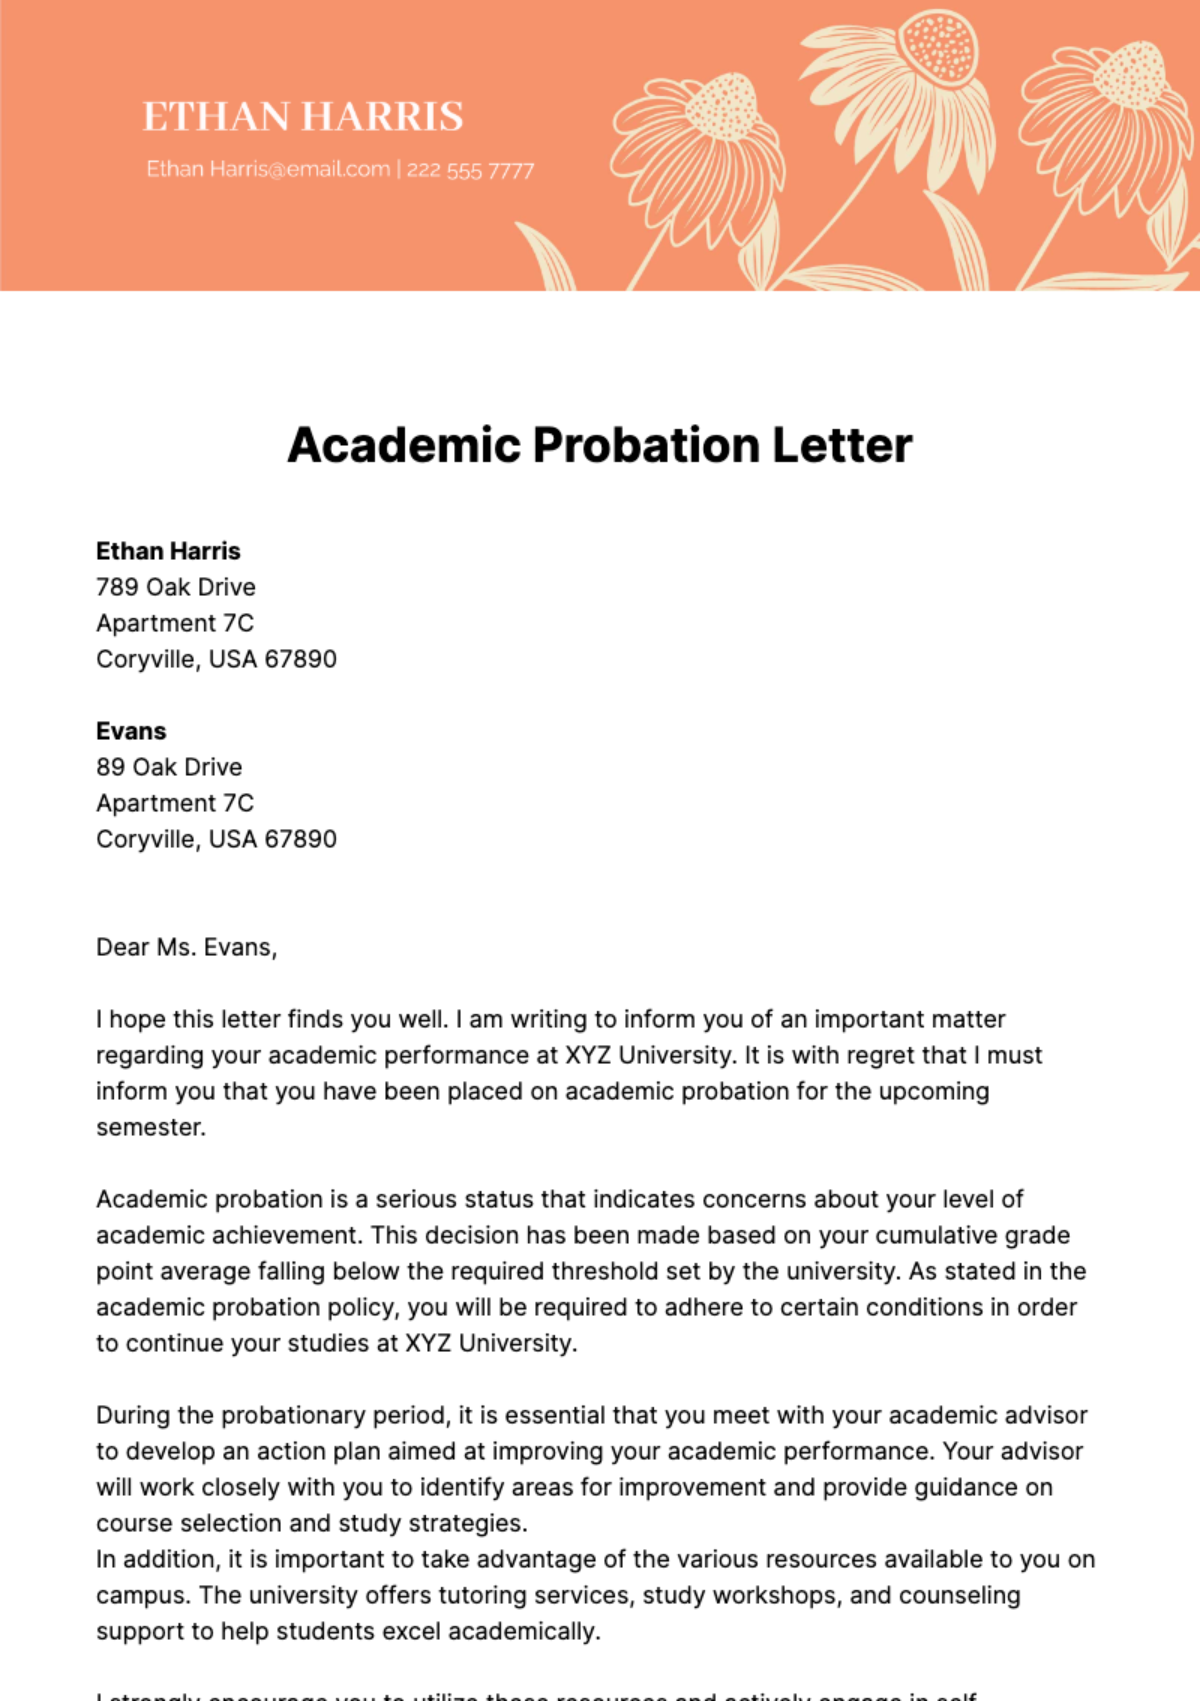 Academic Probation Letter Template